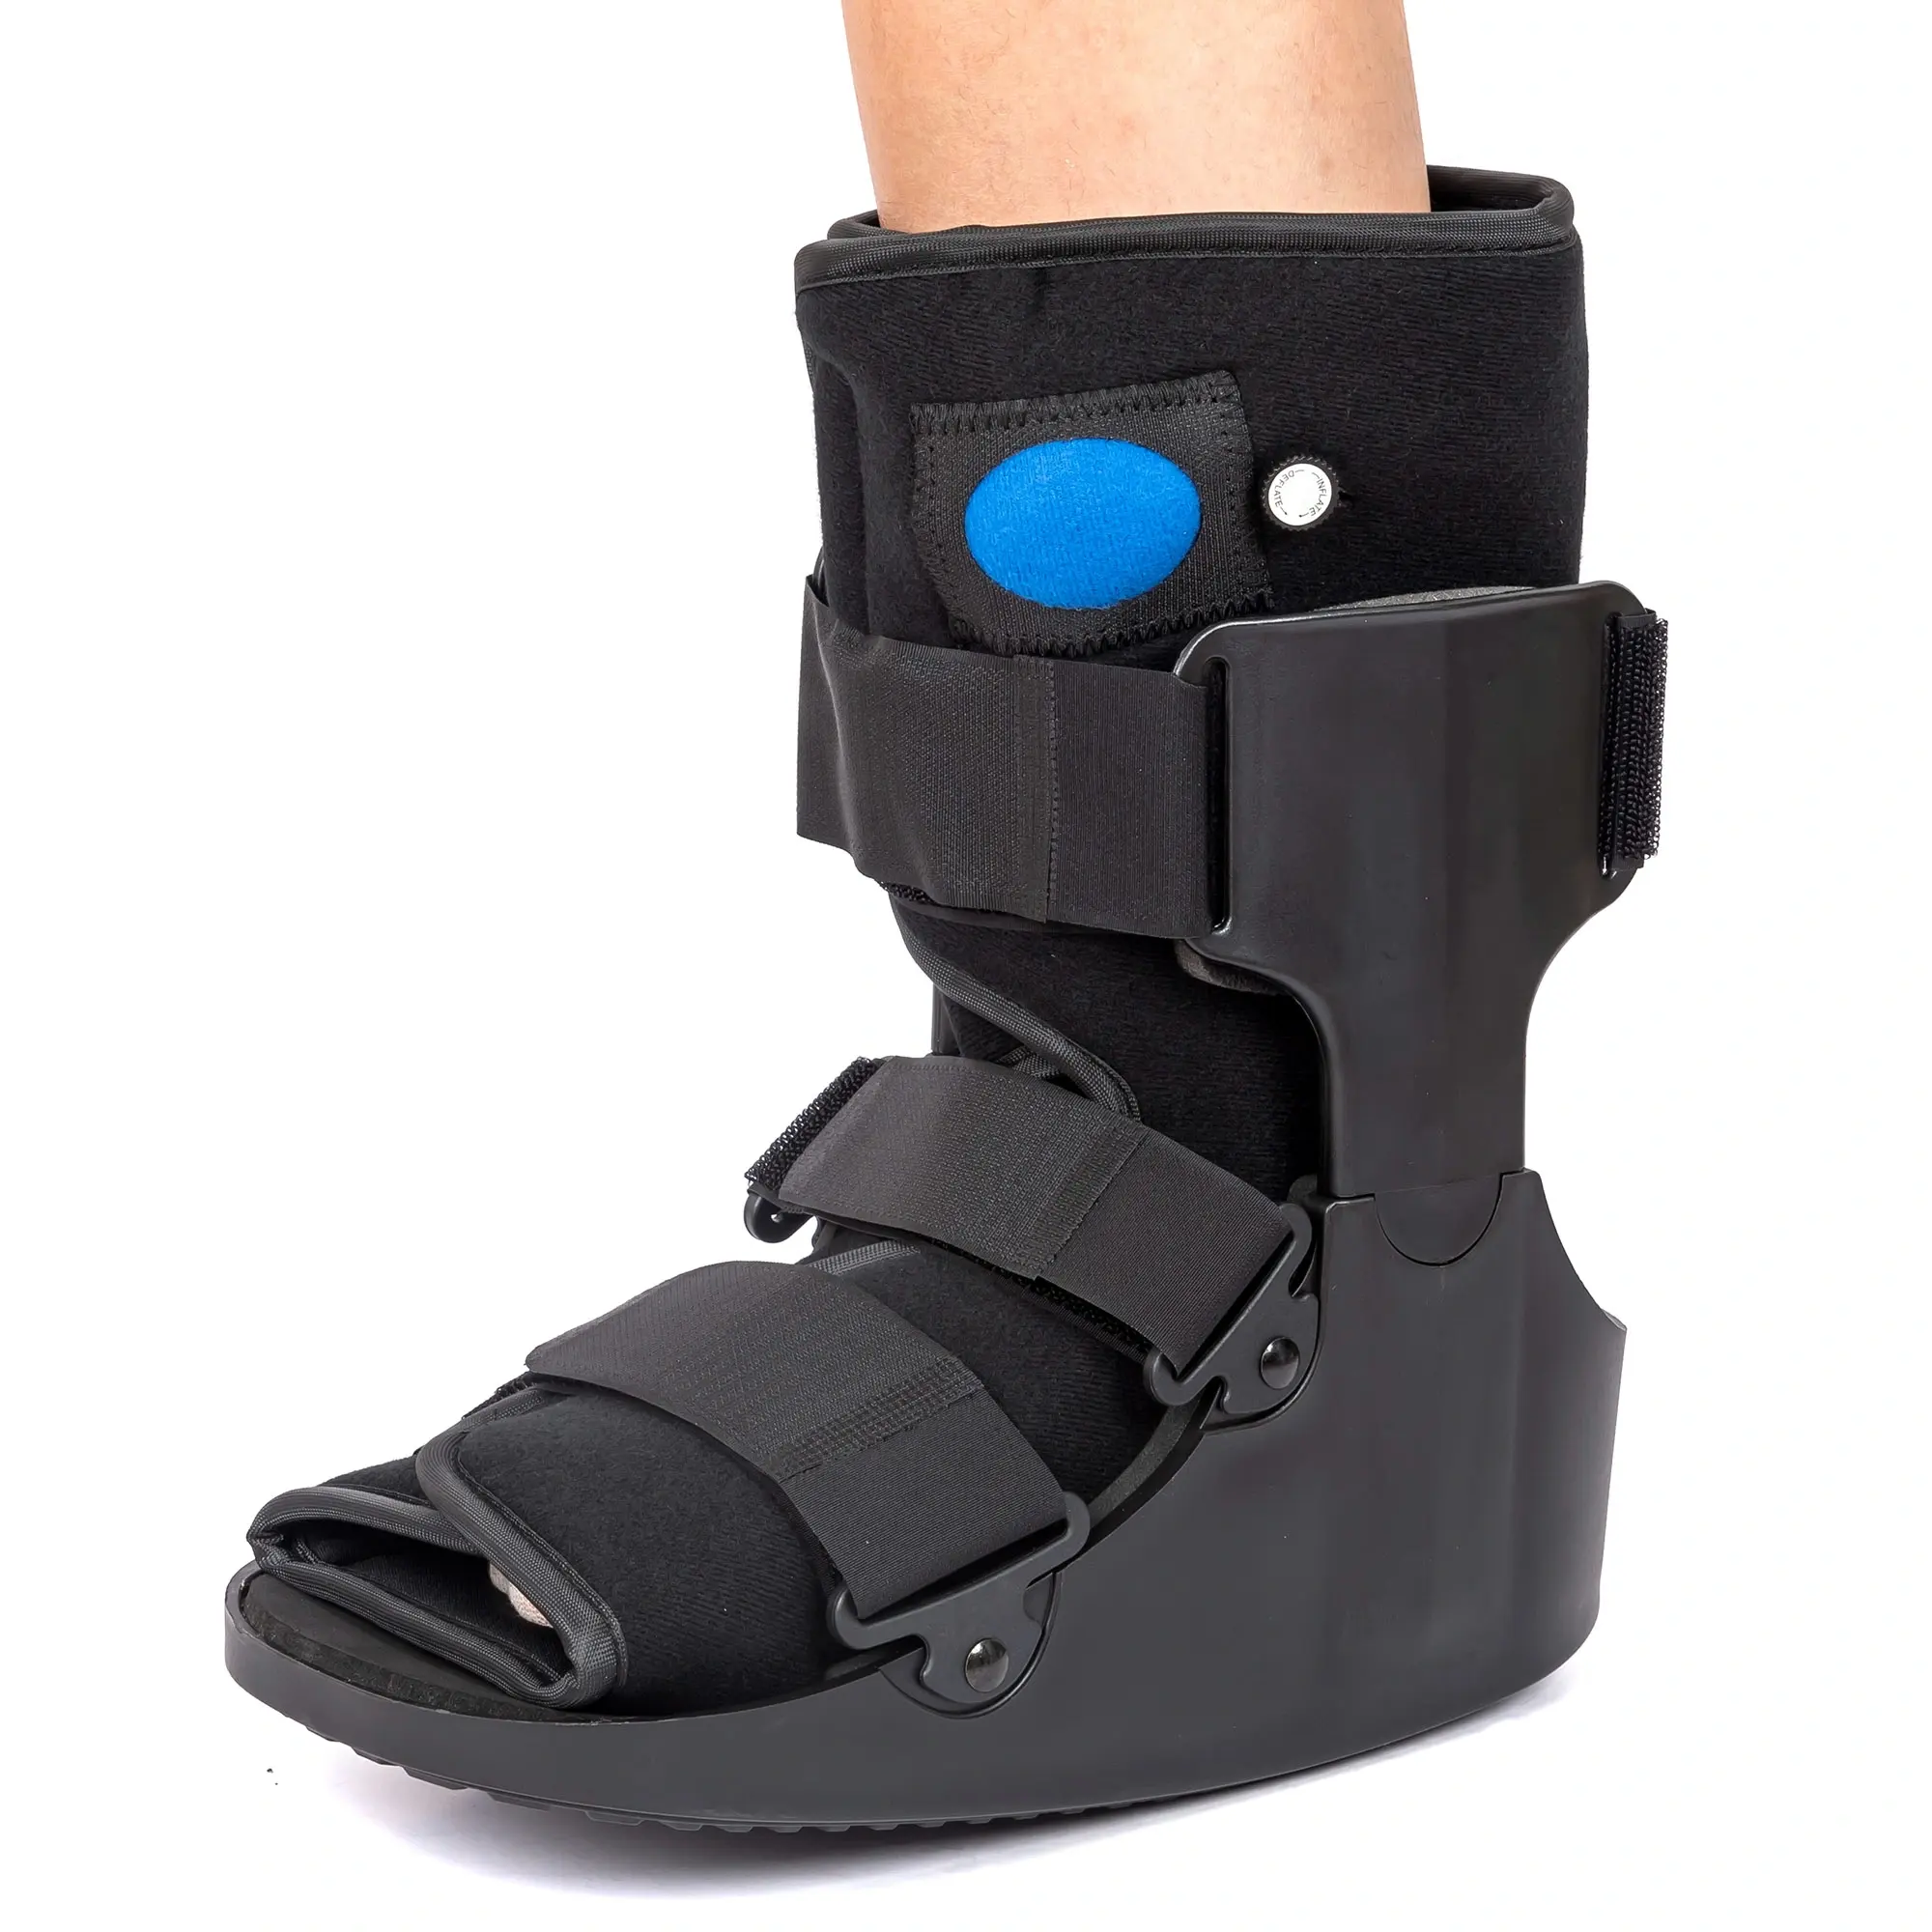 चिकित्सा आर्थोपेडिक स्थिर फ्रैक्चर समर्थन चिकित्सा वायवीय चलने बूट पट्टी टखने संभालो एयर कैम वाकर बूट